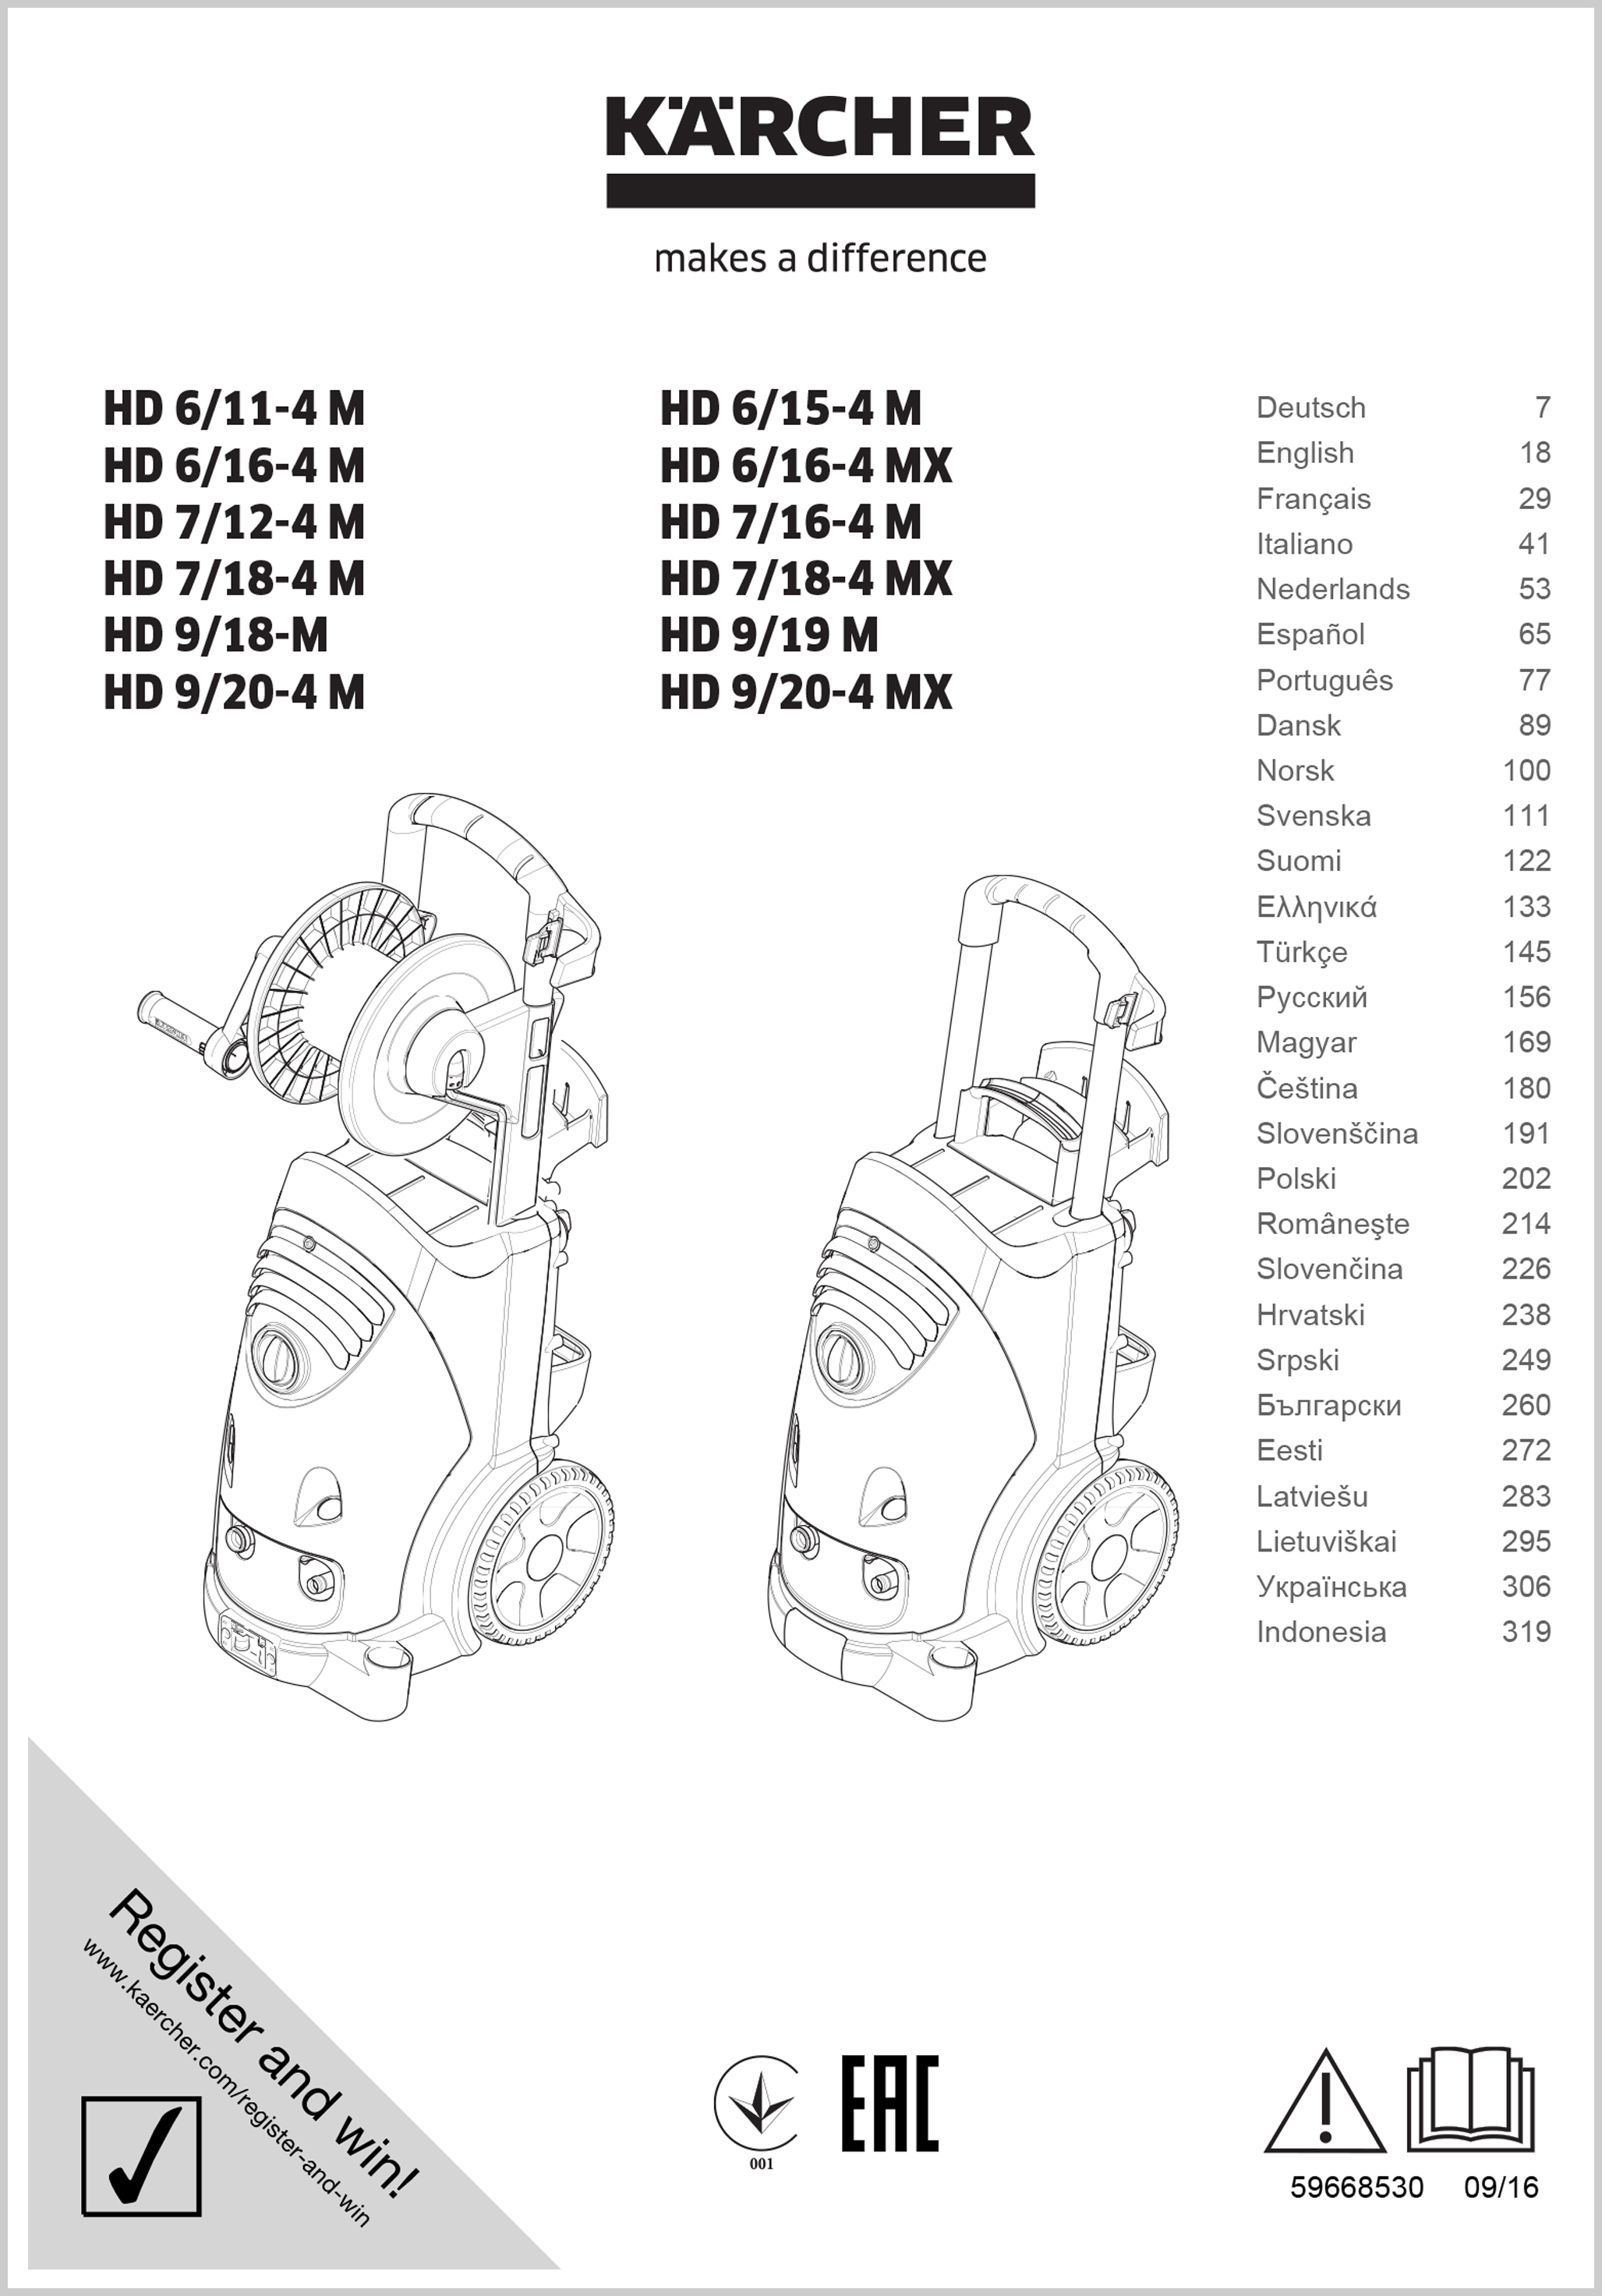 Karcher 721 Mx Manual